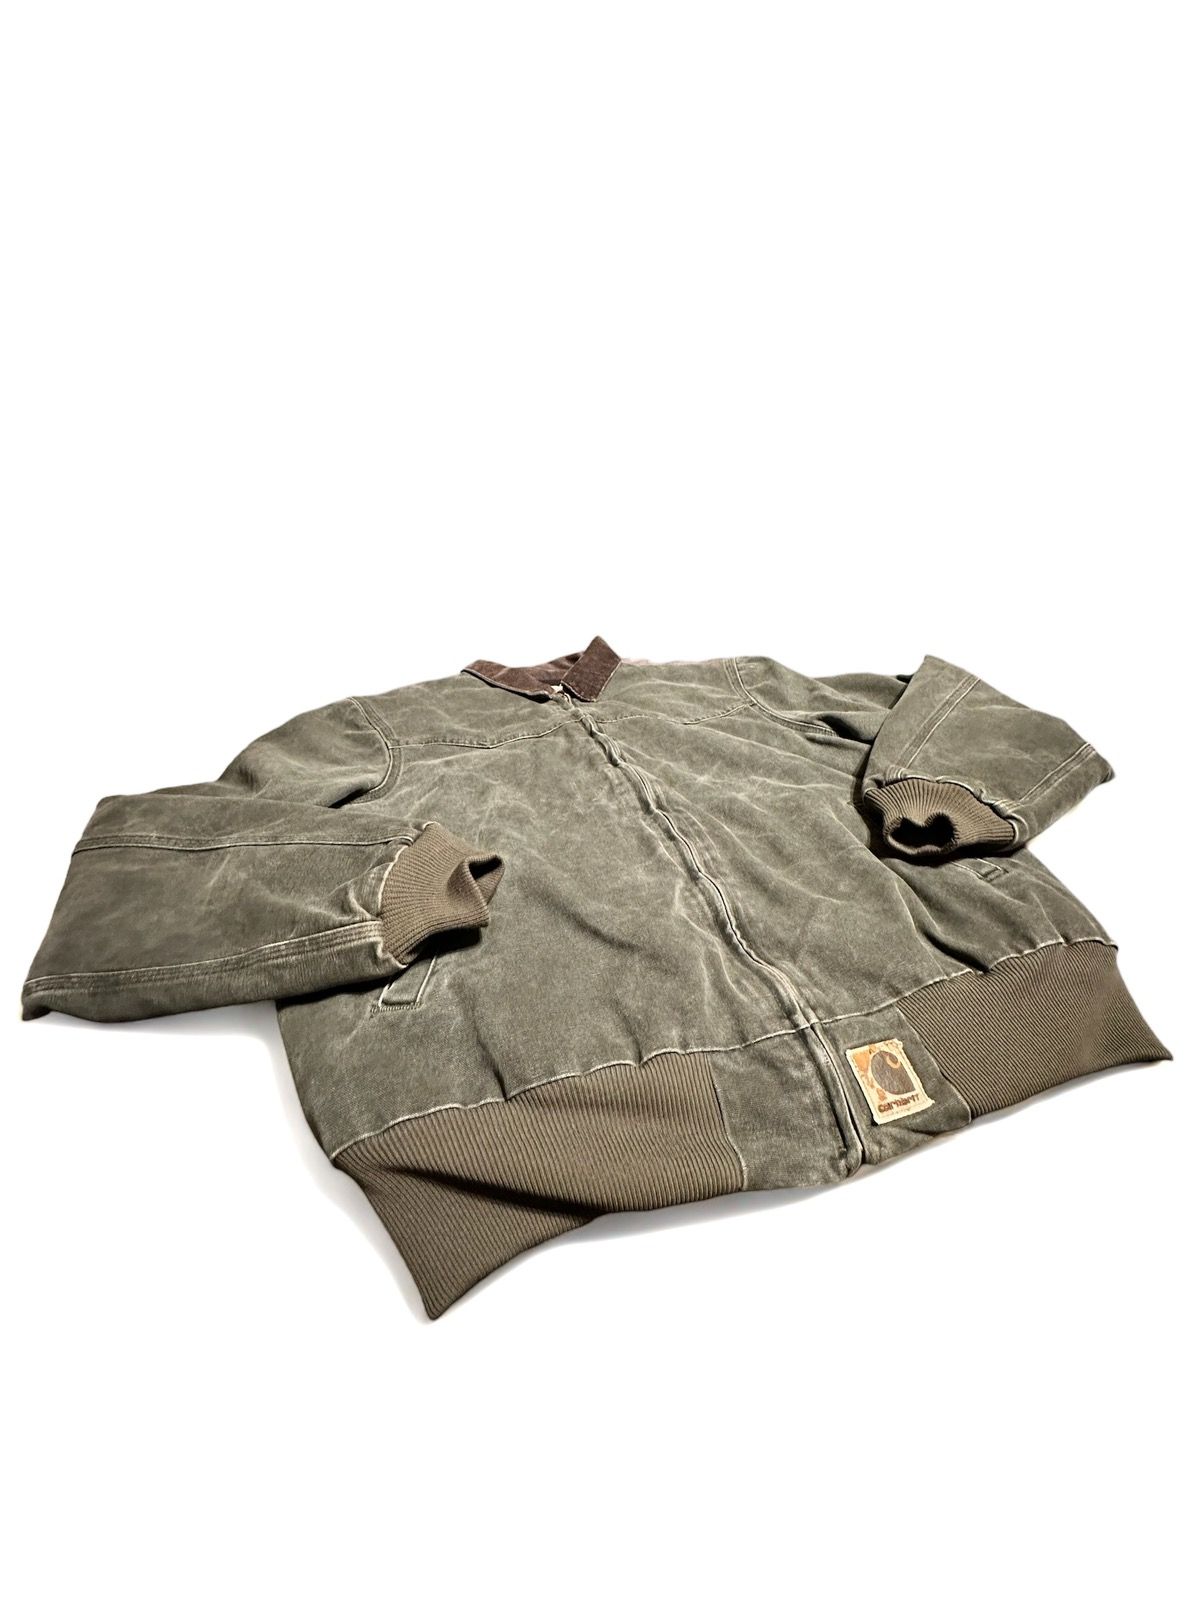 Vintage Faded Carhartt Santa Fe Green Carhartt Jacket Moss J14 Size US L / EU 52-54 / 3 - 3 Thumbnail